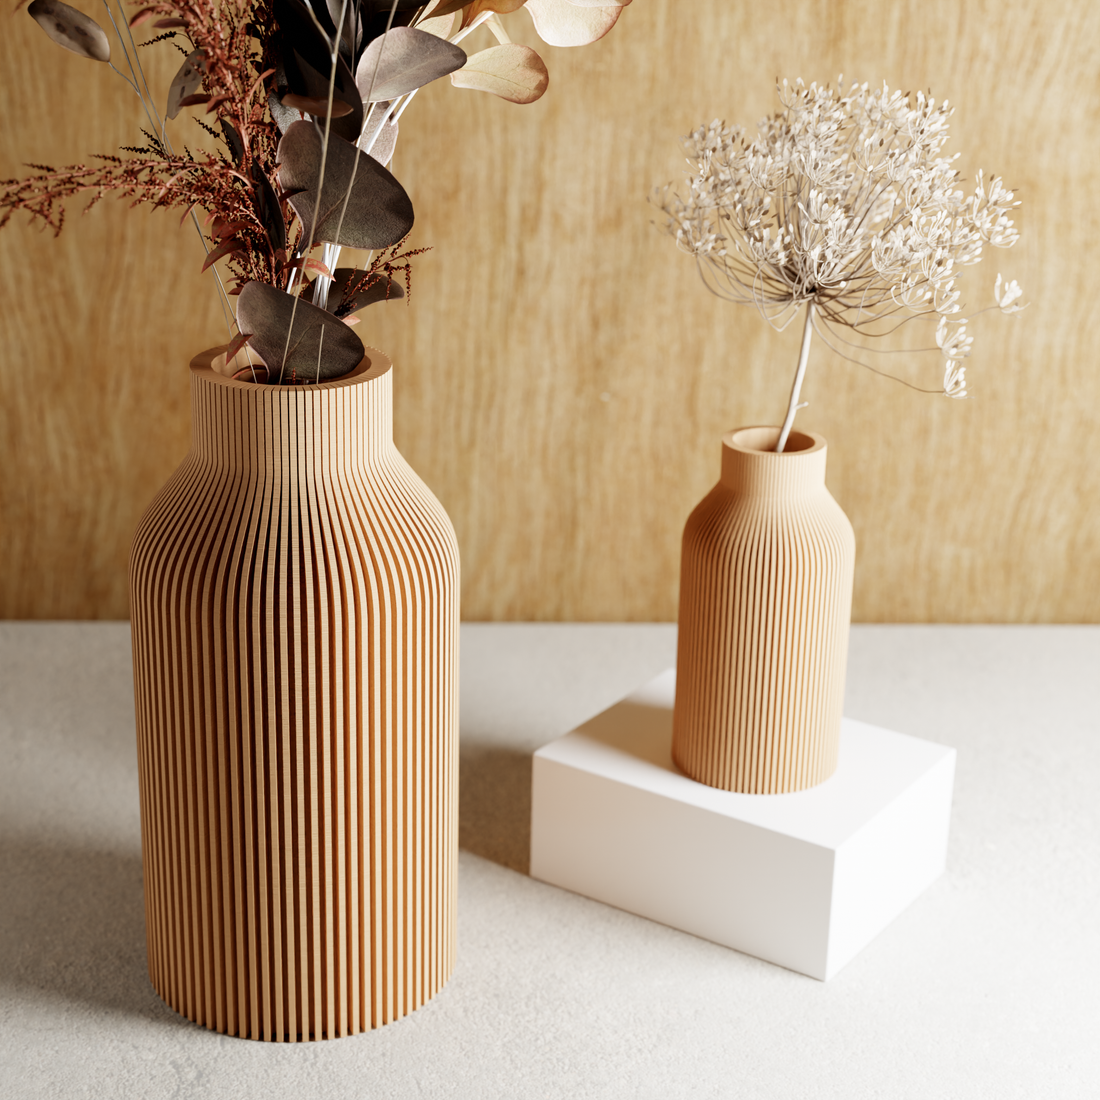 3D Printed Navy Blue 'BOTTLE' Vase for Dried Flowers